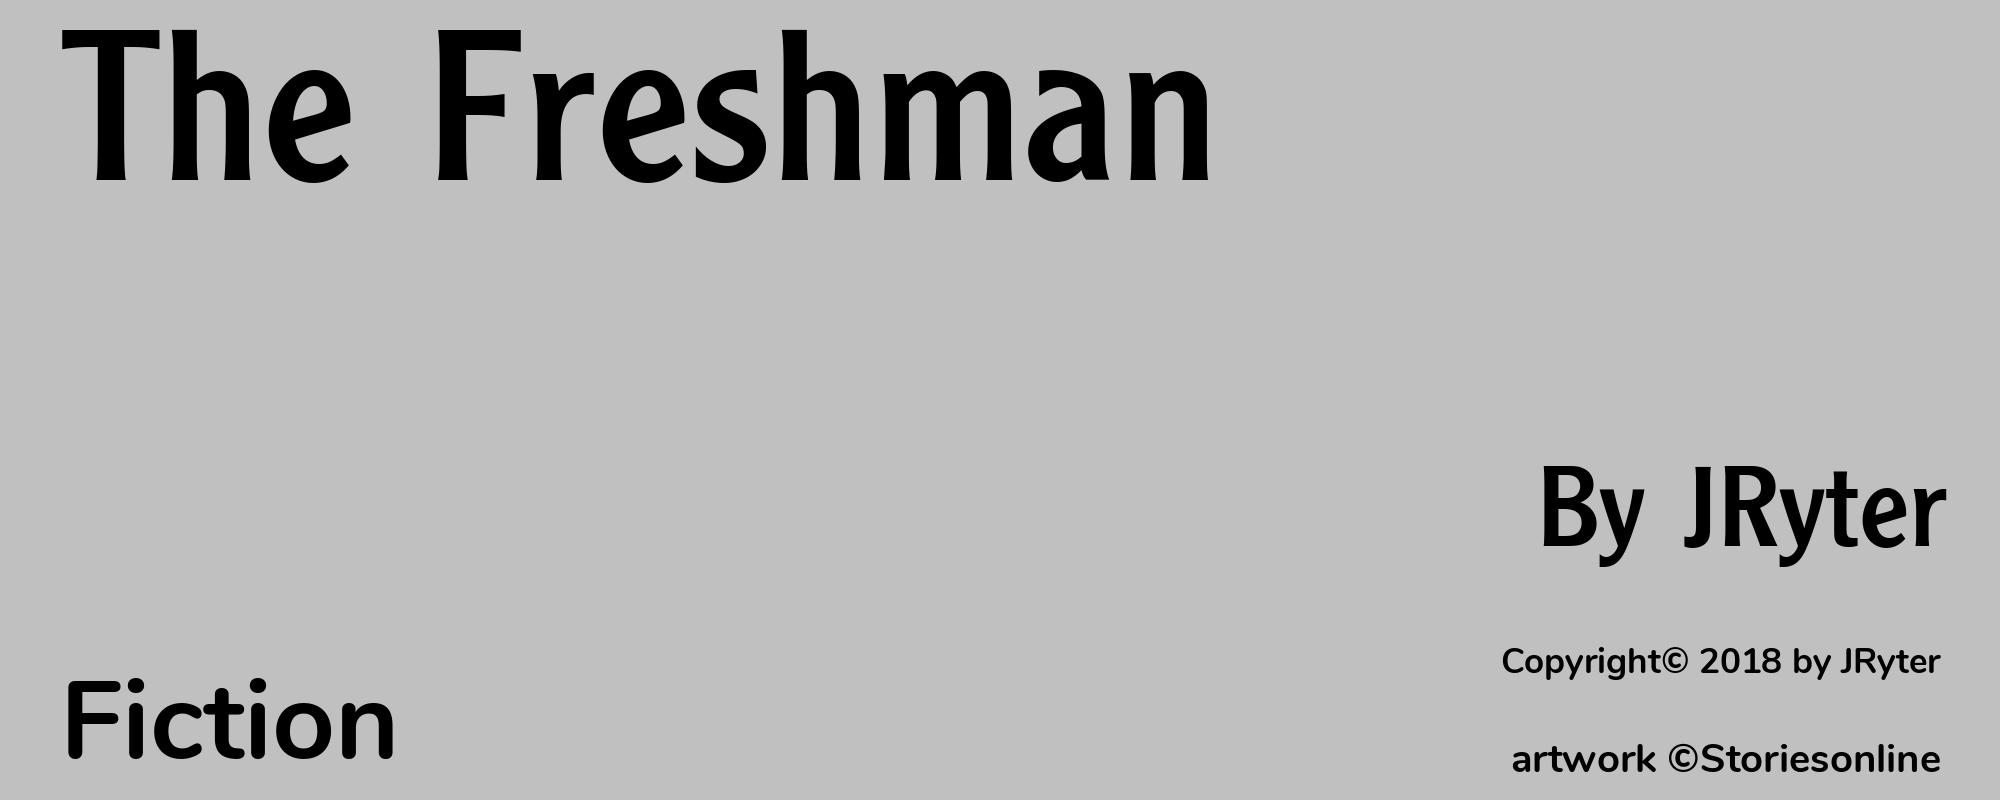 The Freshman - Cover